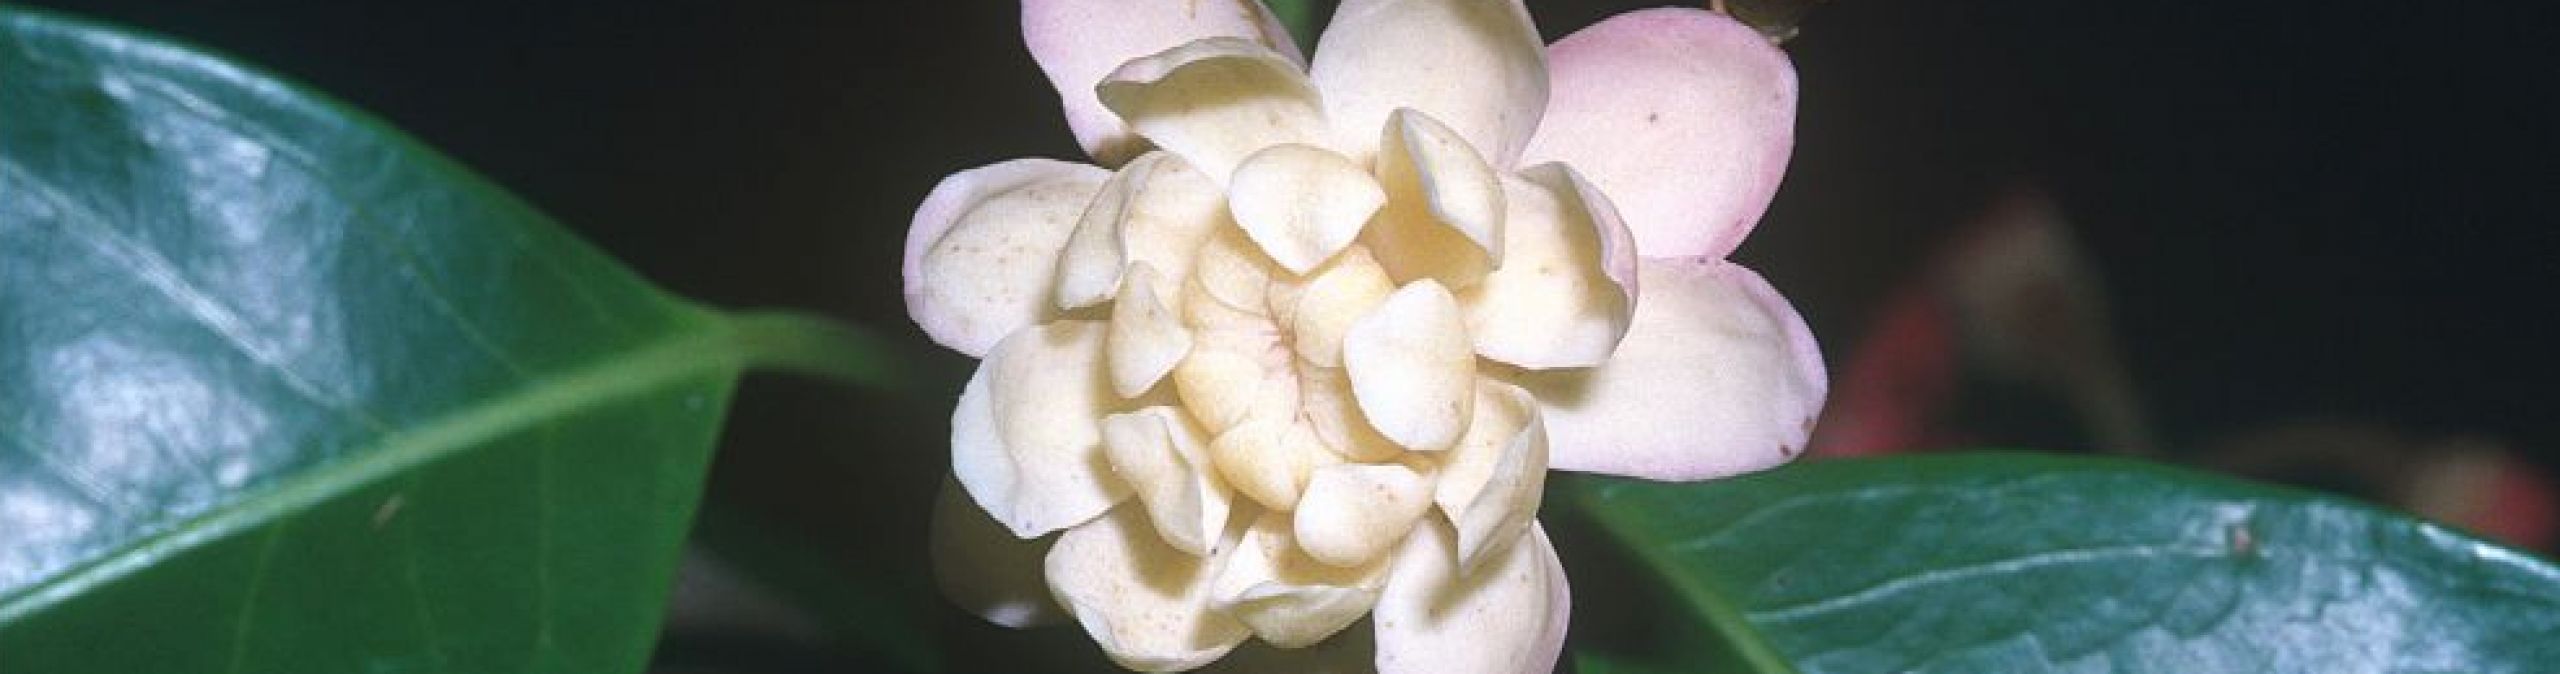 Idiospermum  australiense - a primitive flowering plant
Photographer: WTMA